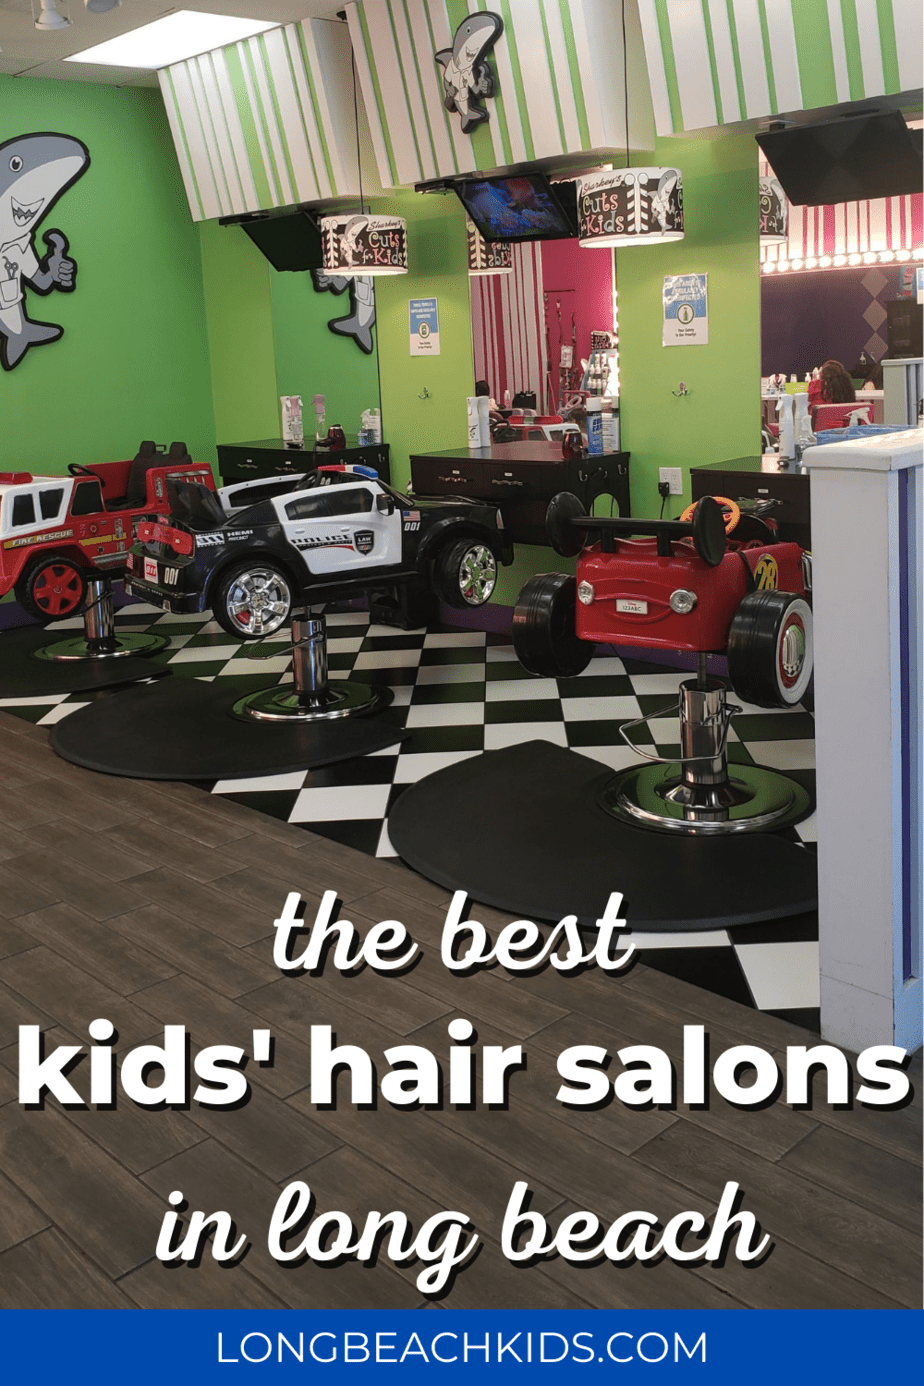 kids hair salon; text: the best kids' hair salons in long beach